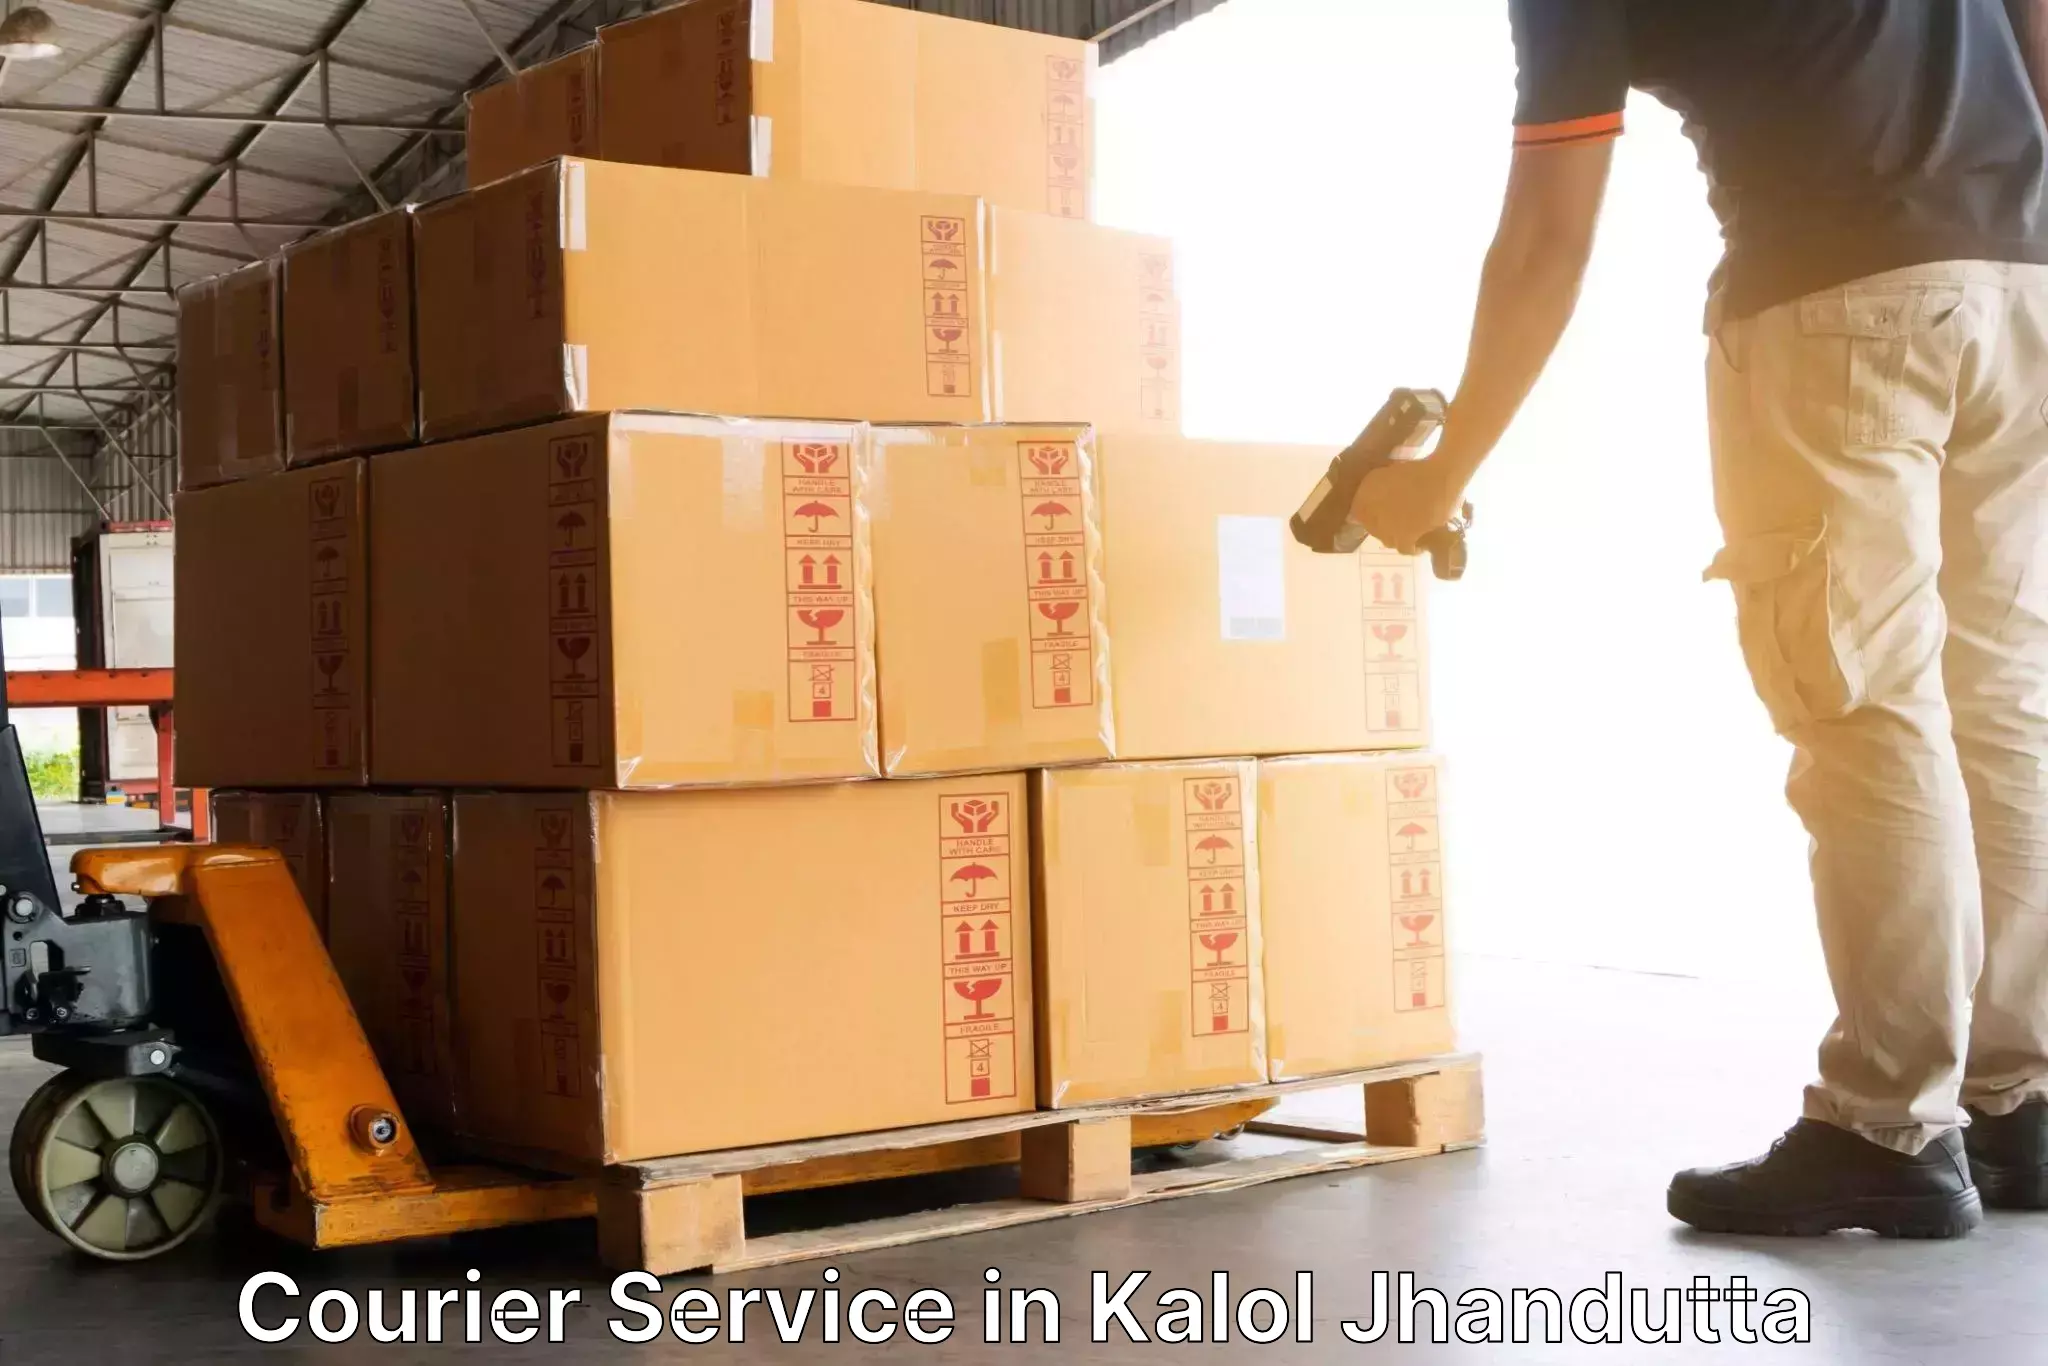 Tailored freight services in Kalol Jhandutta